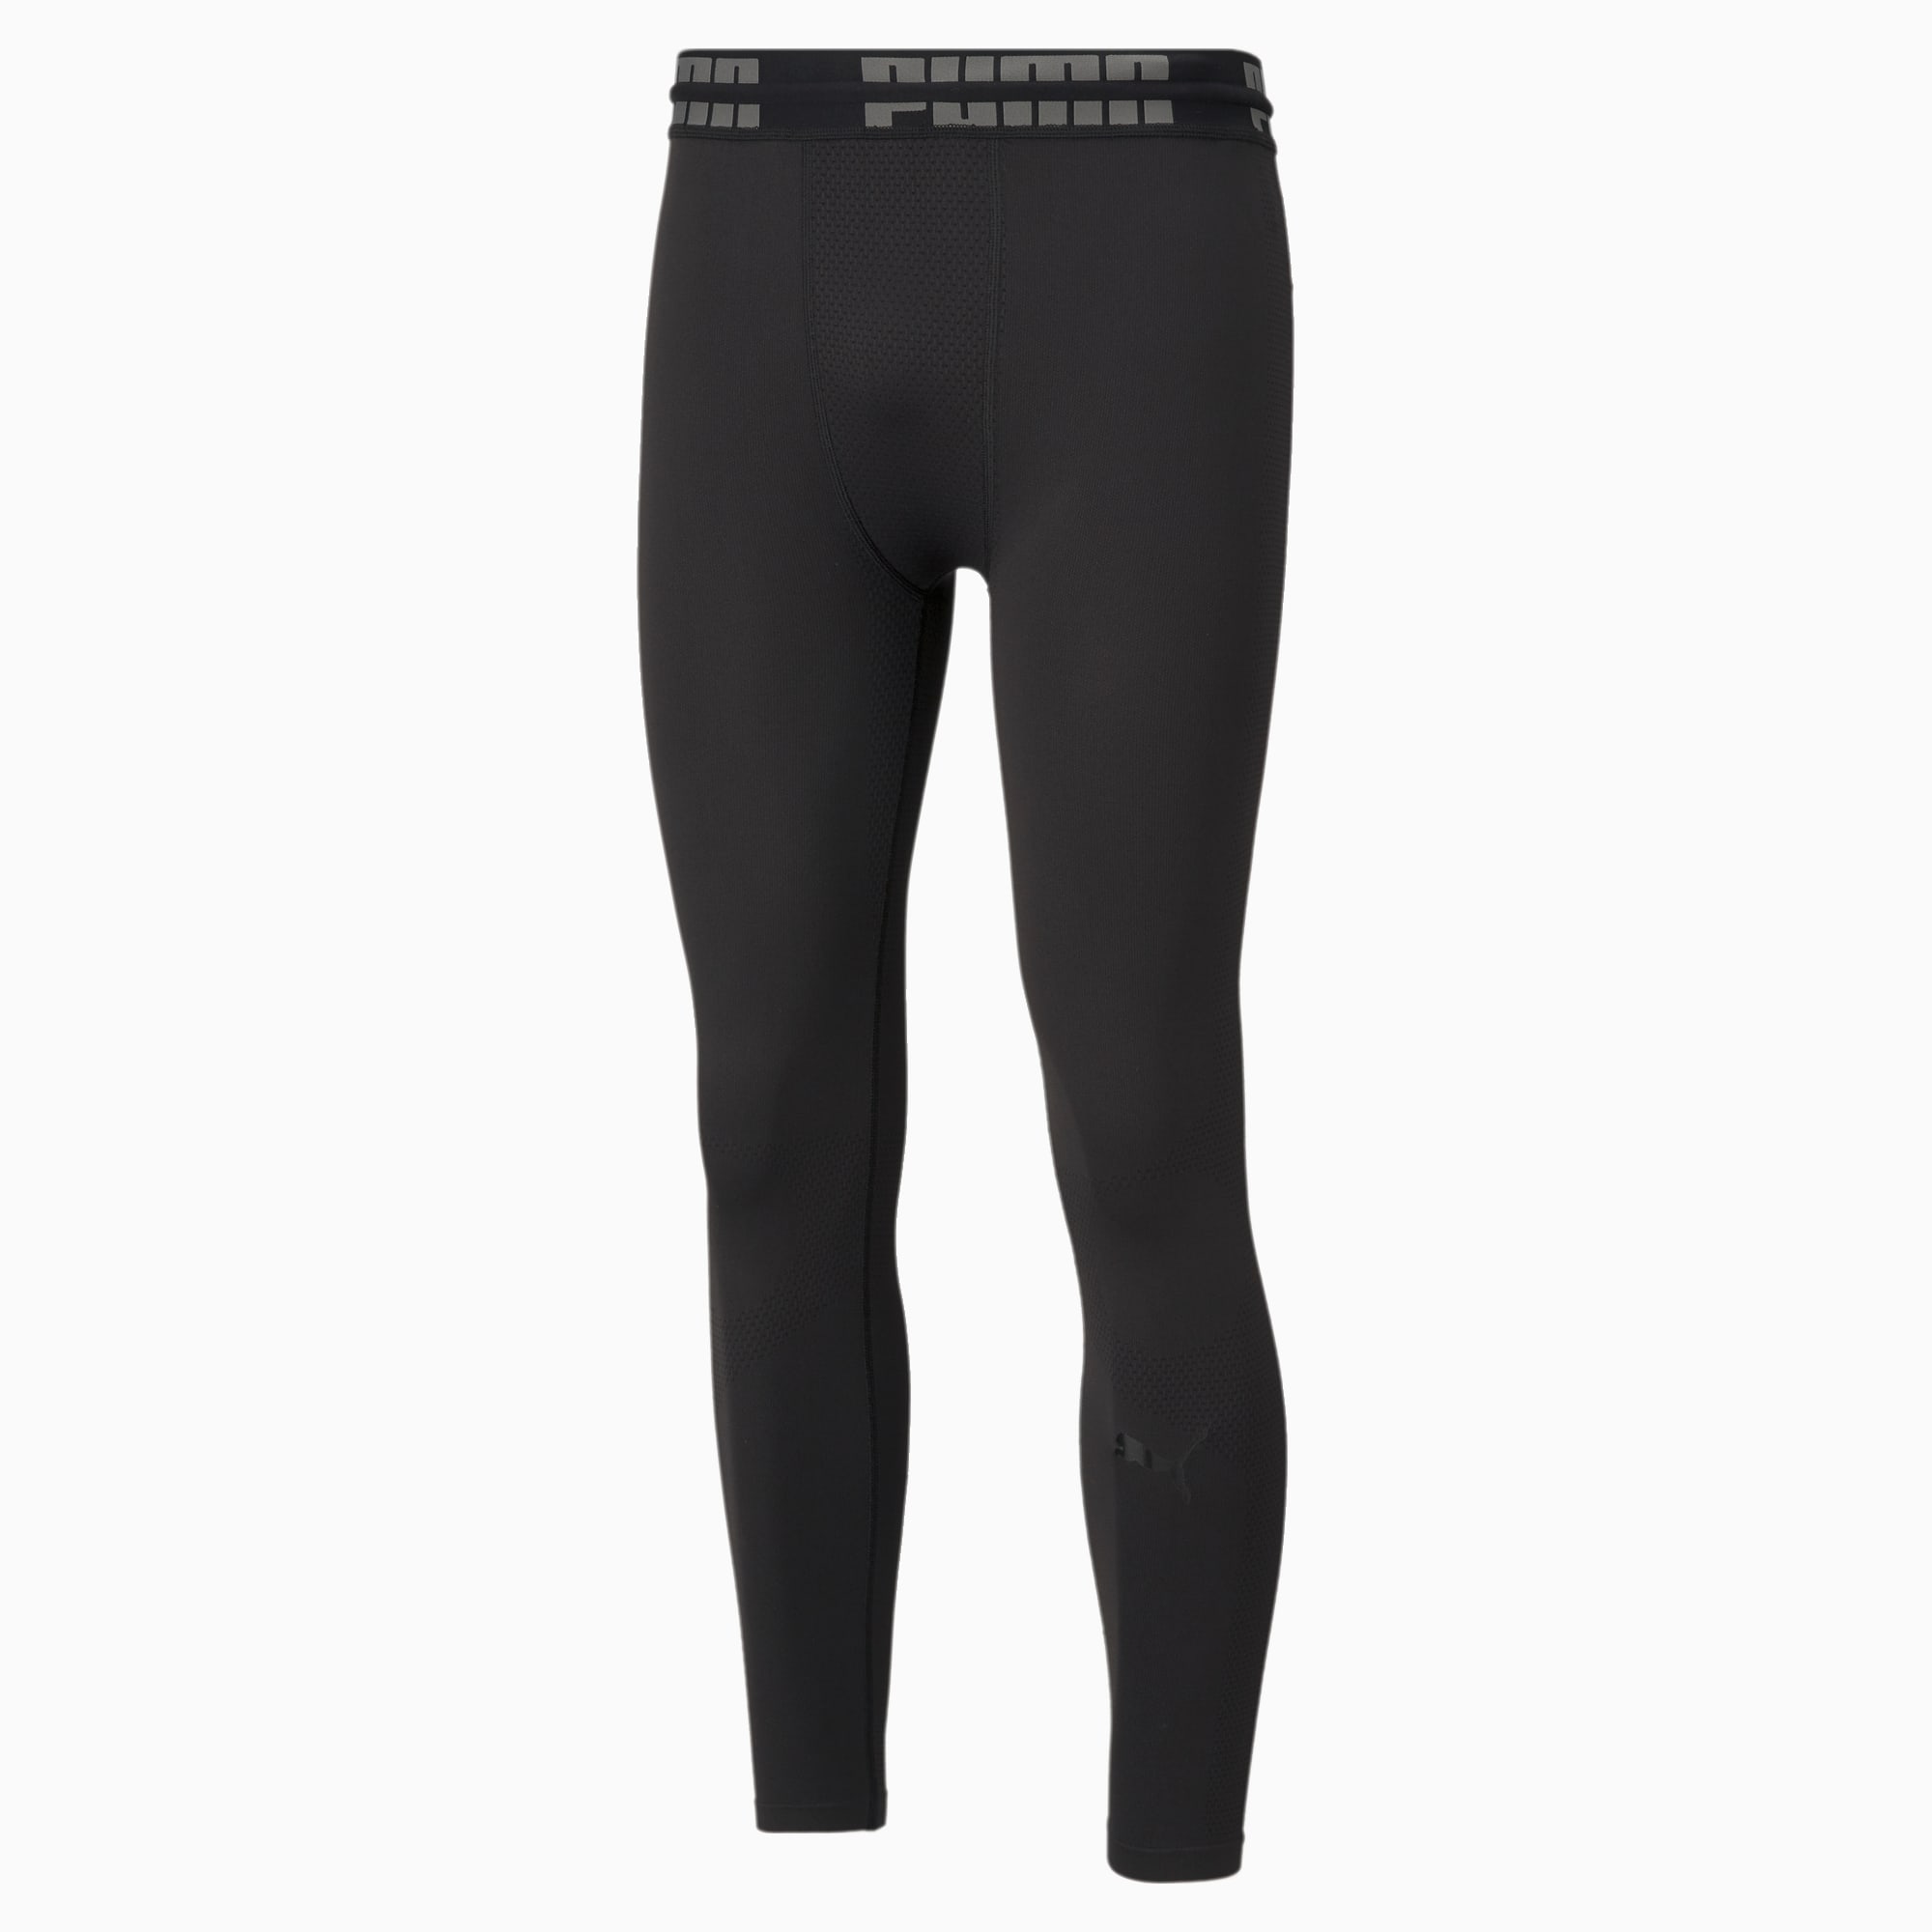 Buy Pro Gym Men's Nylon Compression Pants/Lower (Black, Small